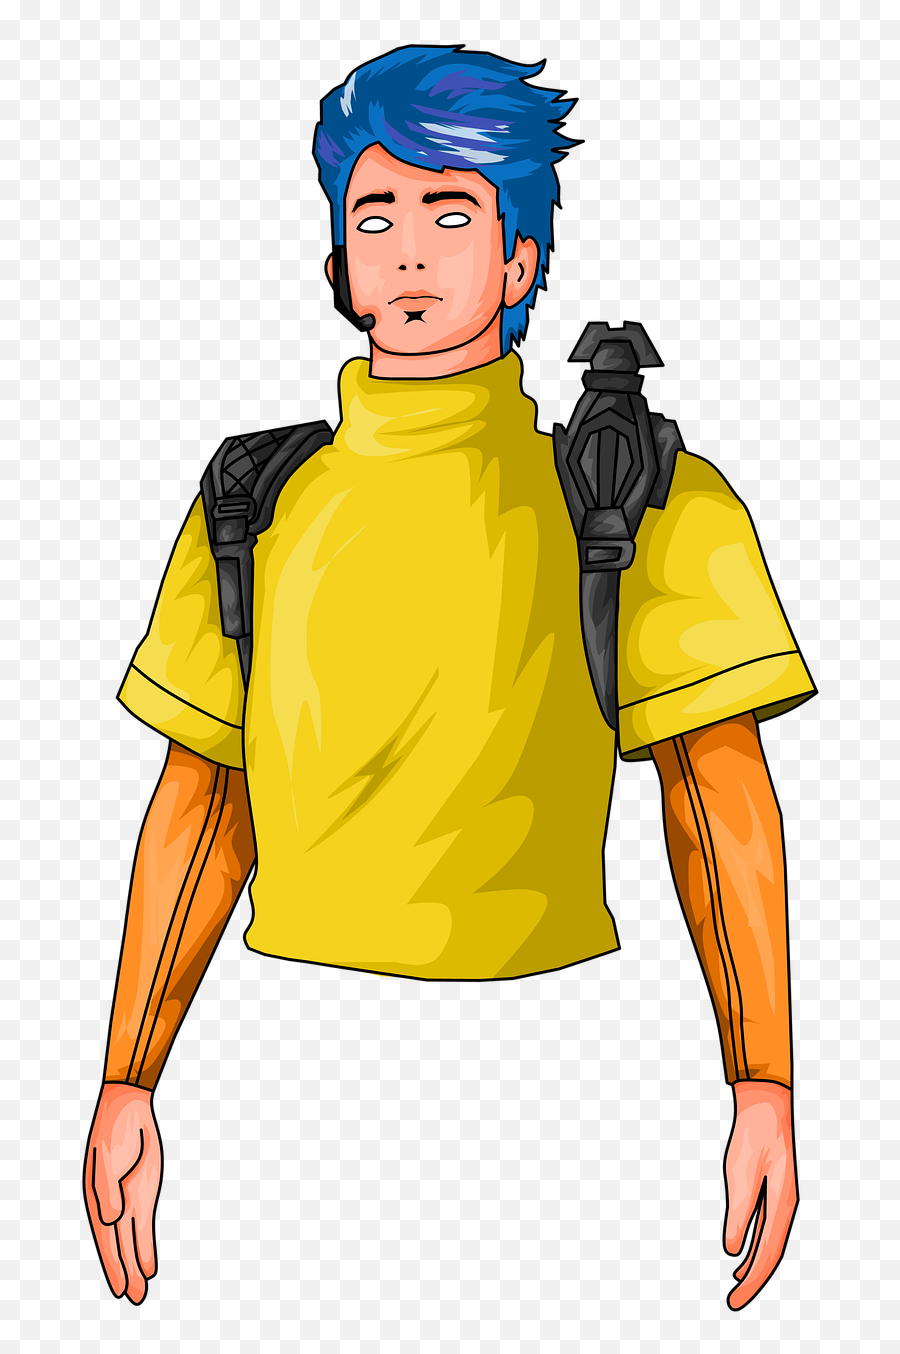 Handsome Boy Modern Mascot Free - Free Image On Pixabay Logo Free Fire Boy Emoji,Fire Png